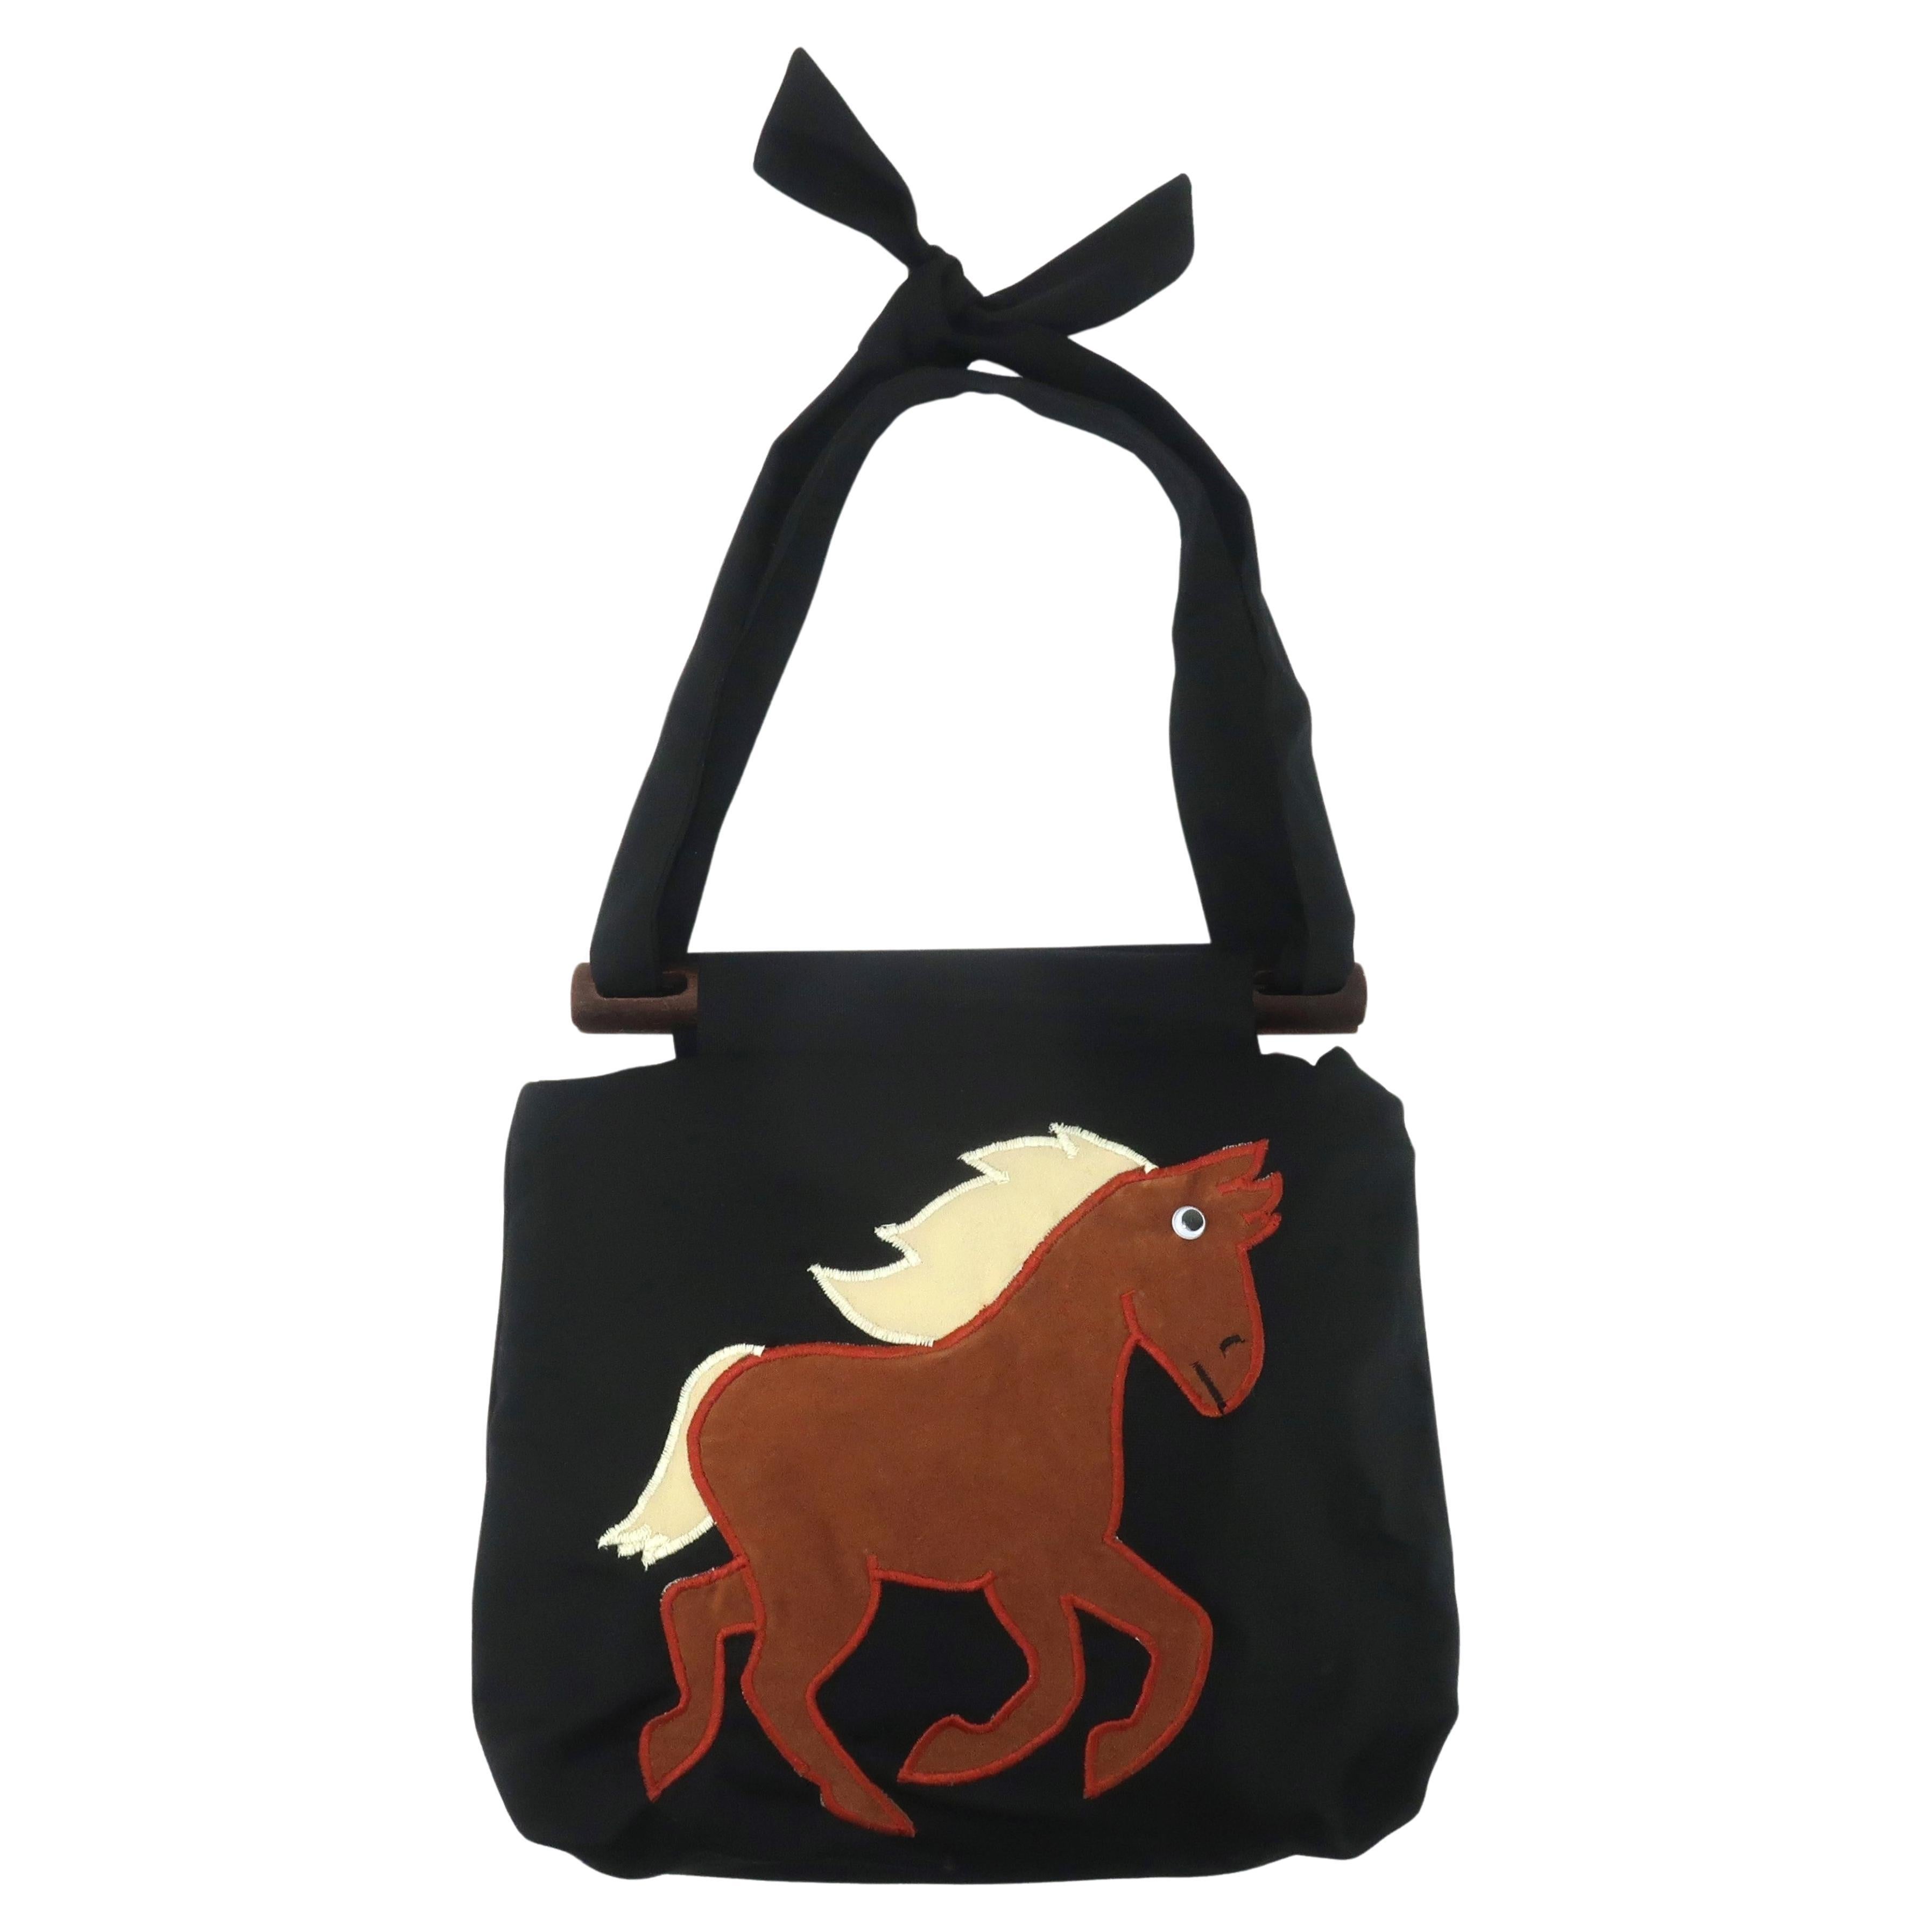 Vintage Horse Applique Tote Style Handbag For Sale